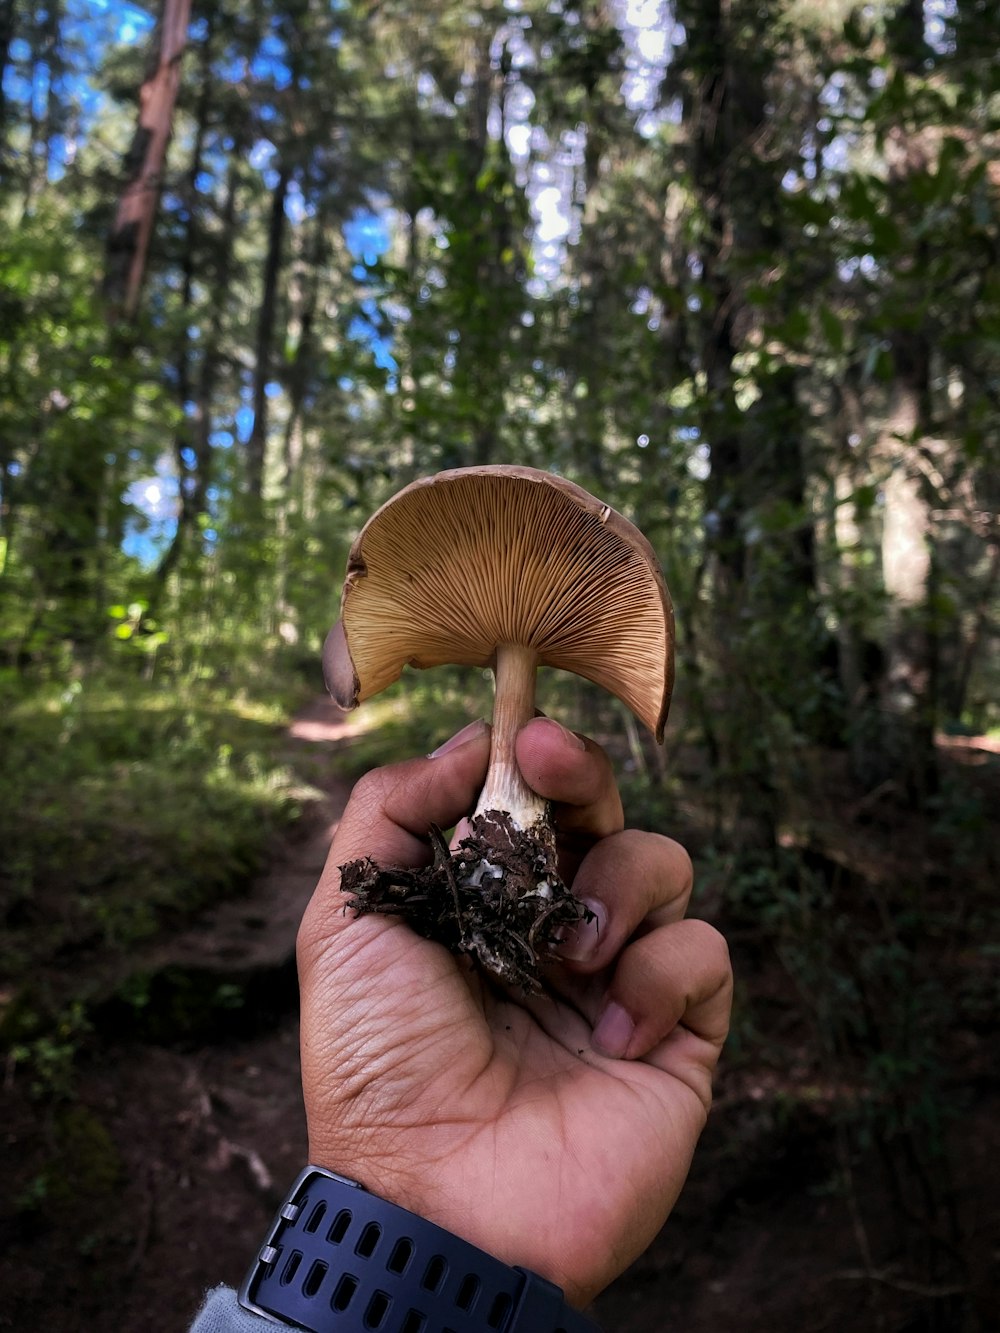 a mushroom in a hand